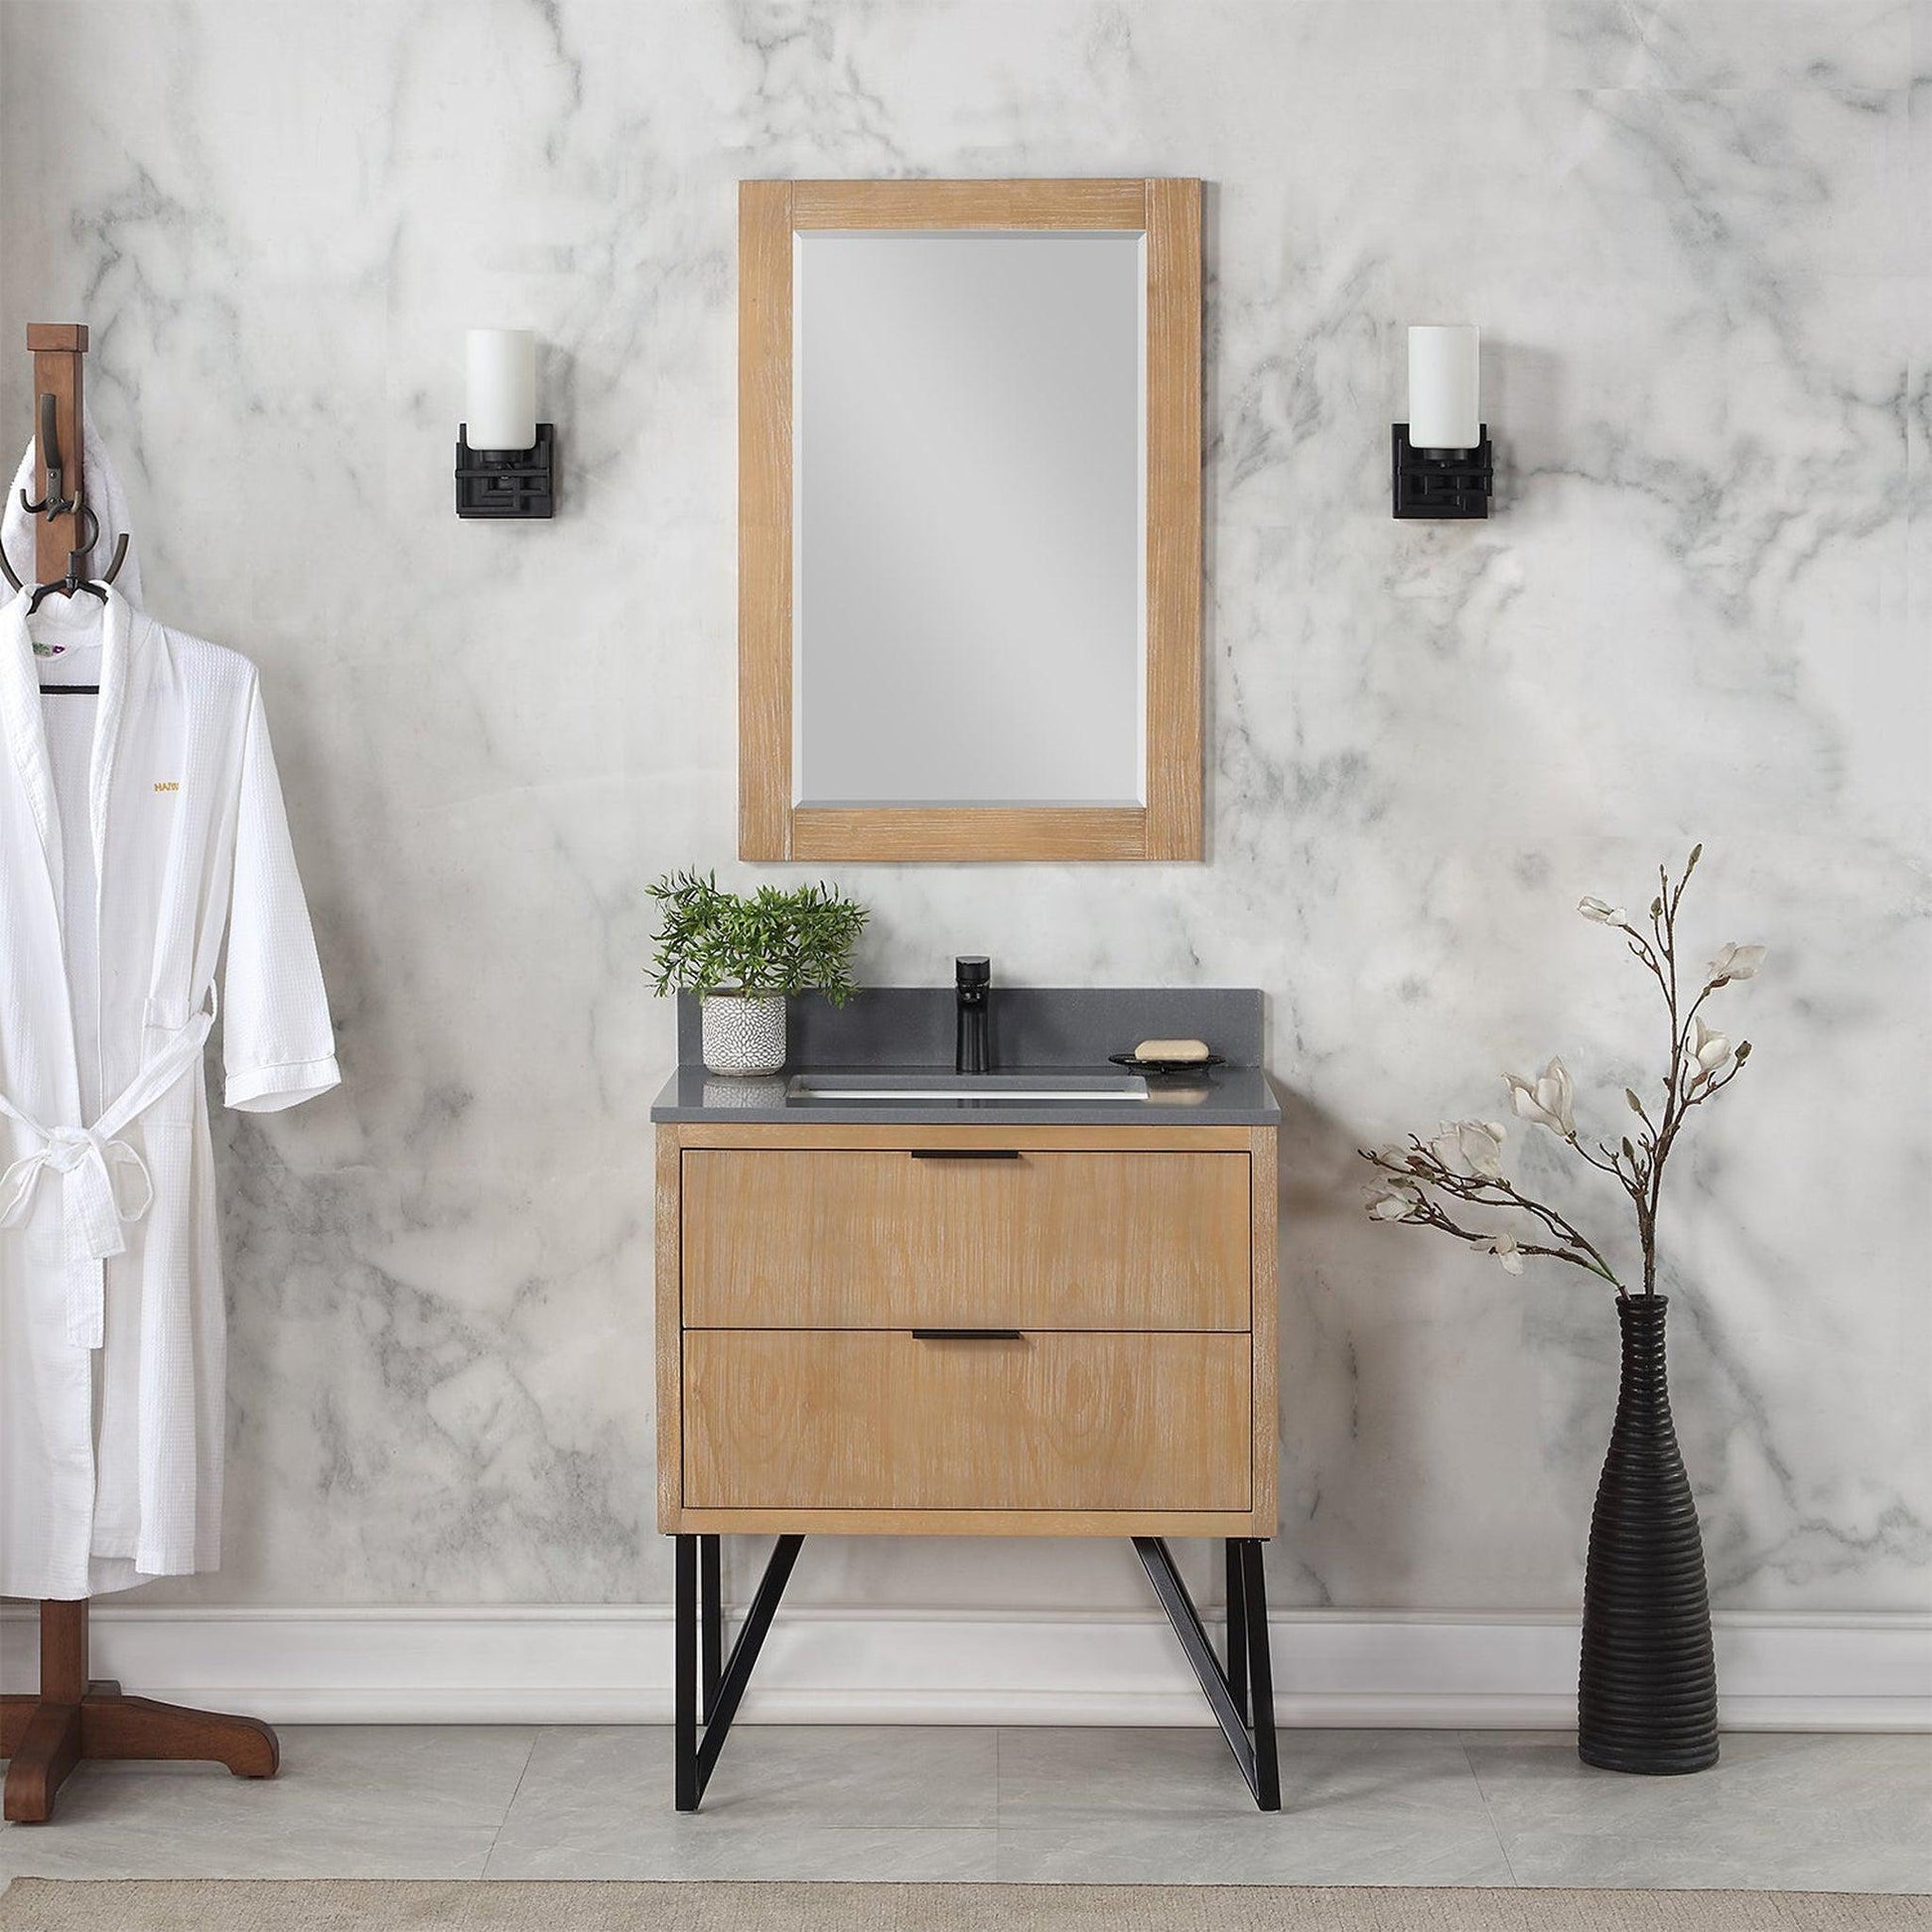 Altair Helios 30" Weathered Pine Freestanding Single Bathroom Vanity Set With Mirror, Concrete Gray Composite Stone Top, Single Rectangular Undermount Ceramic Sink, Overflow, and Backsplash